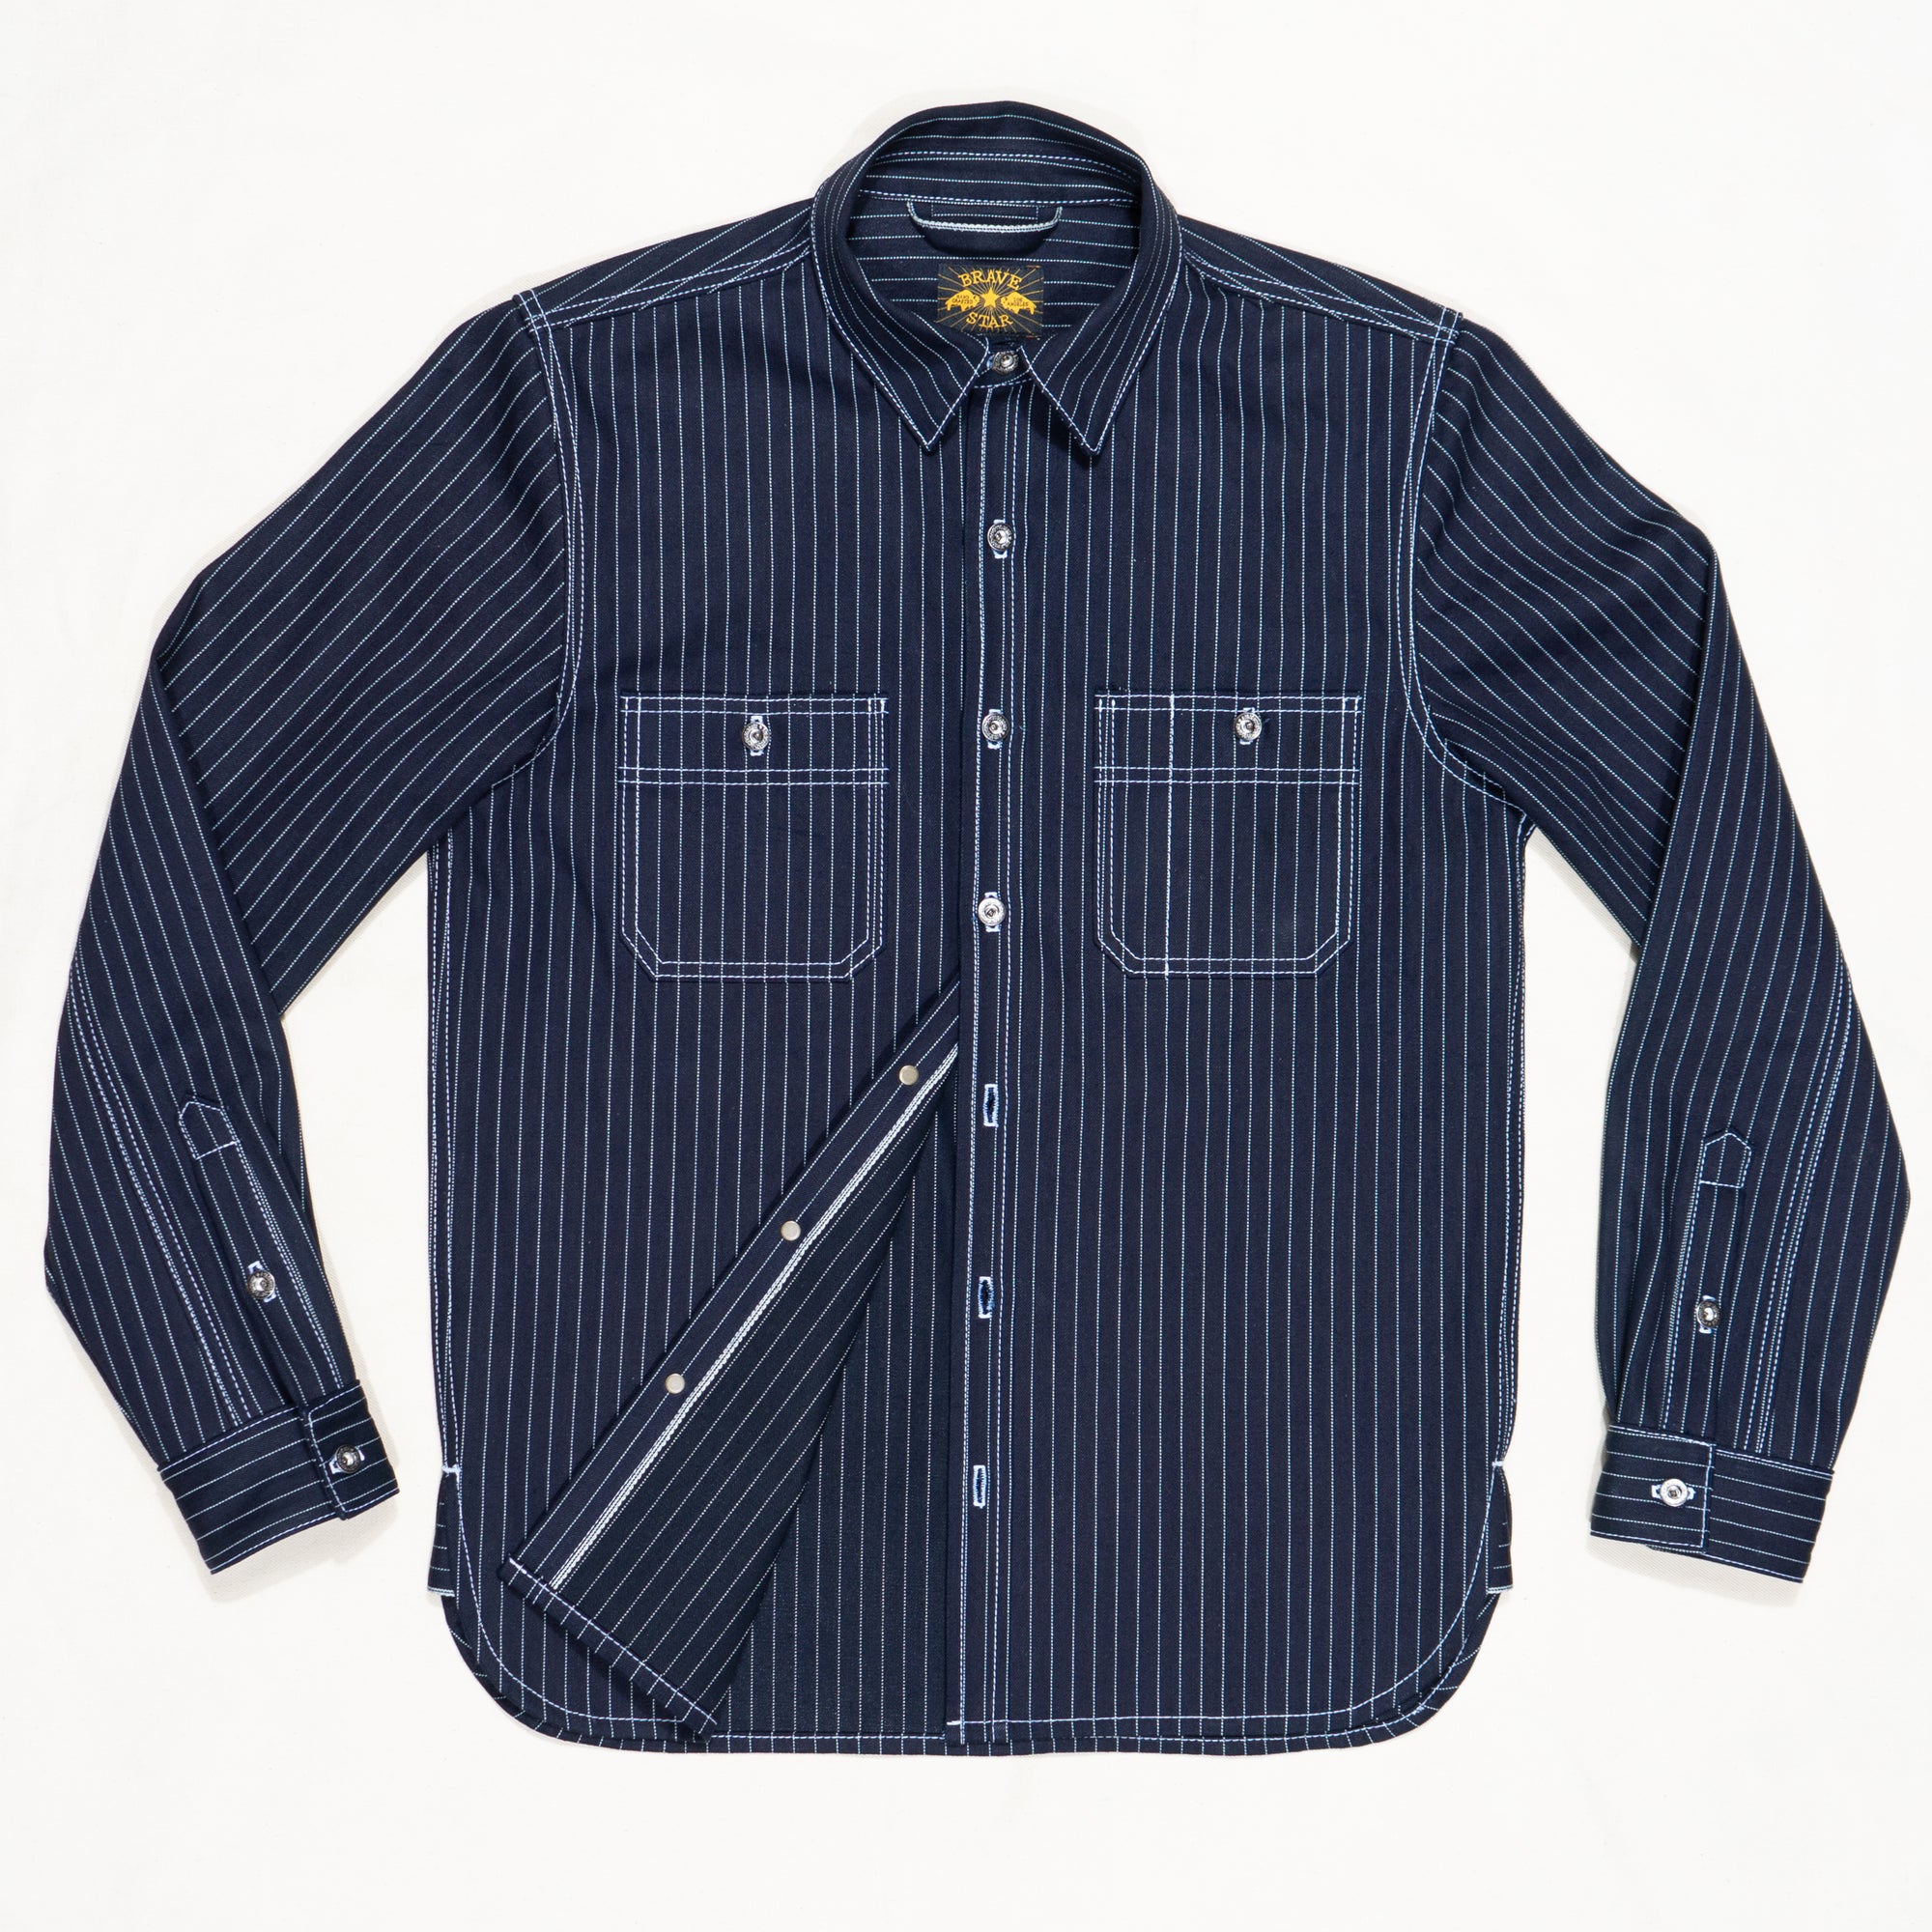 Denim Jackets For Men: 5 Jean Jacket Outfit Ideas - YouTube